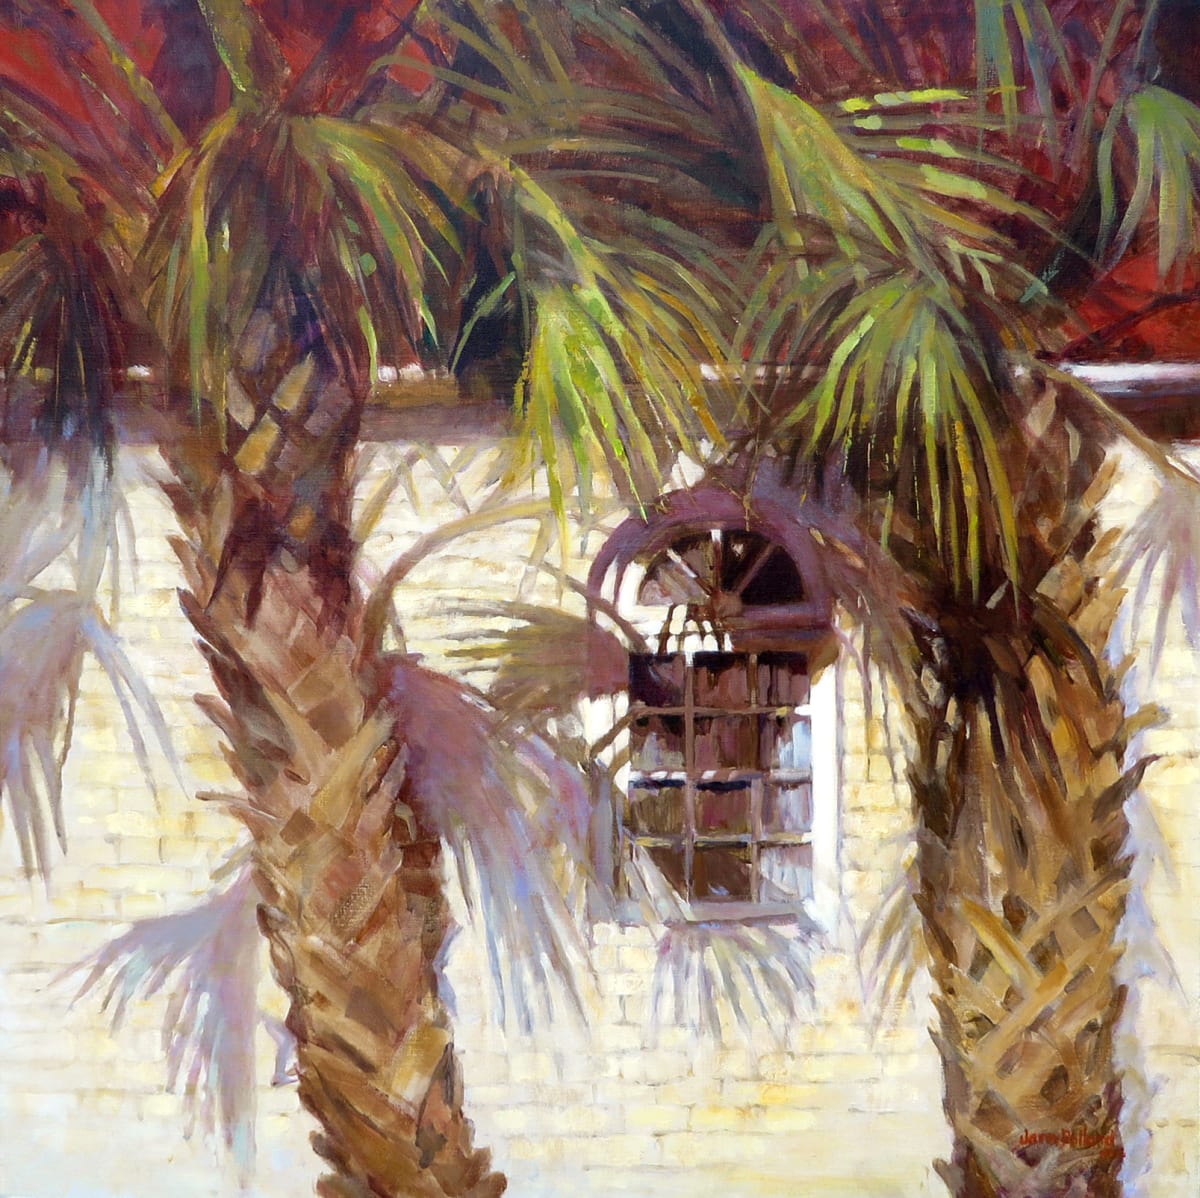 Palmetto Palm Shadows by Jann Lawrence Pollard  Image: Palmetto Palm Shadows, Charleston, SC